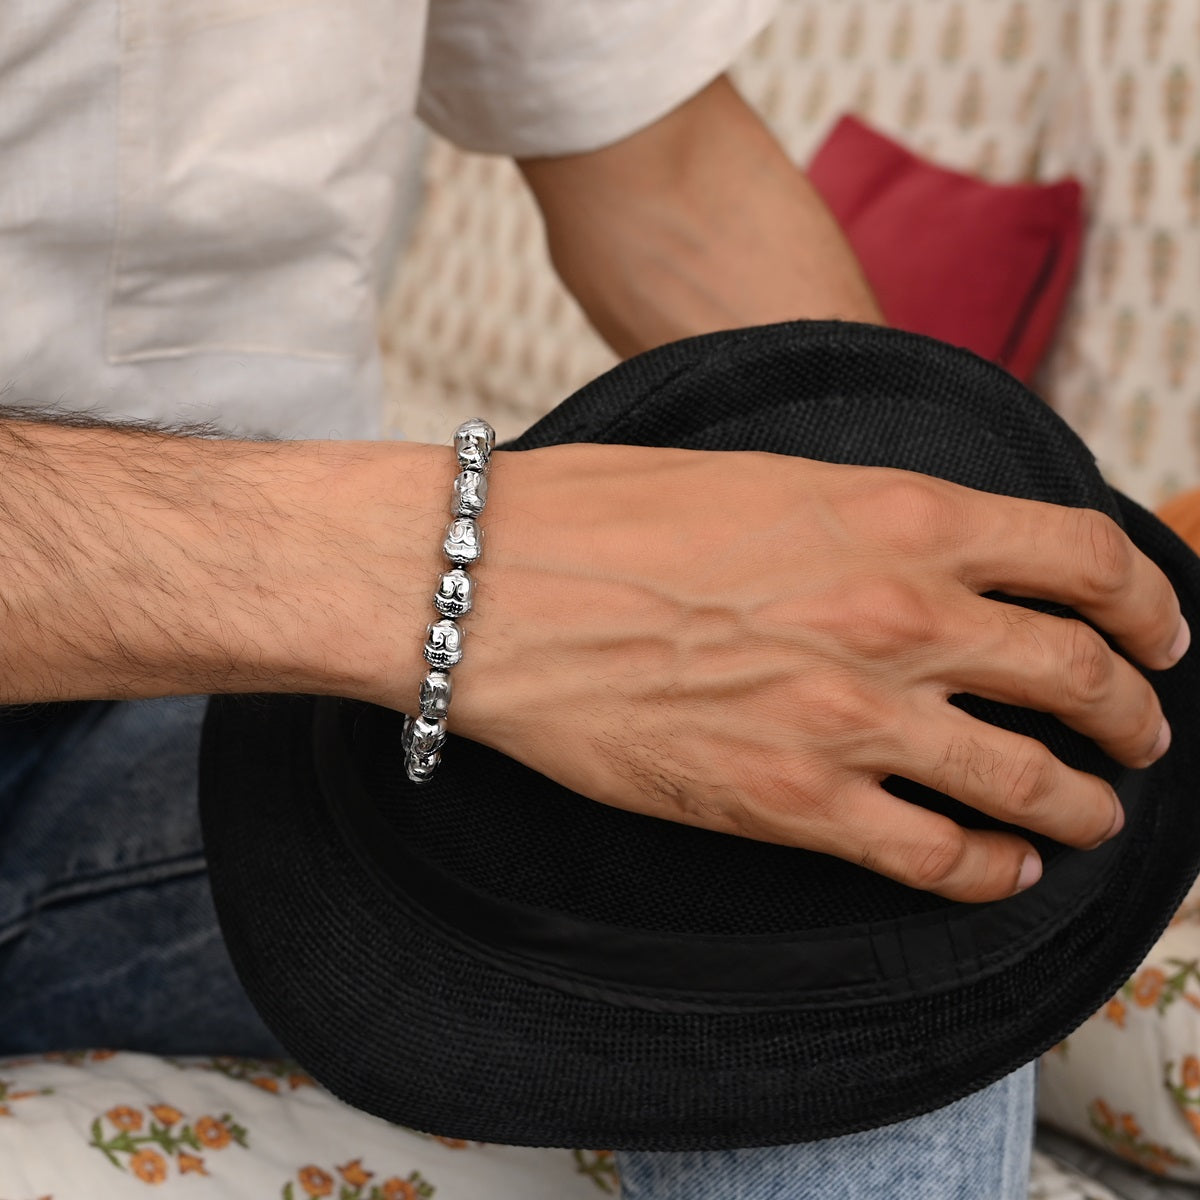 Serenity Shine Silver Hematite Buddha Face Stretch Bracelet with 8mm Beads